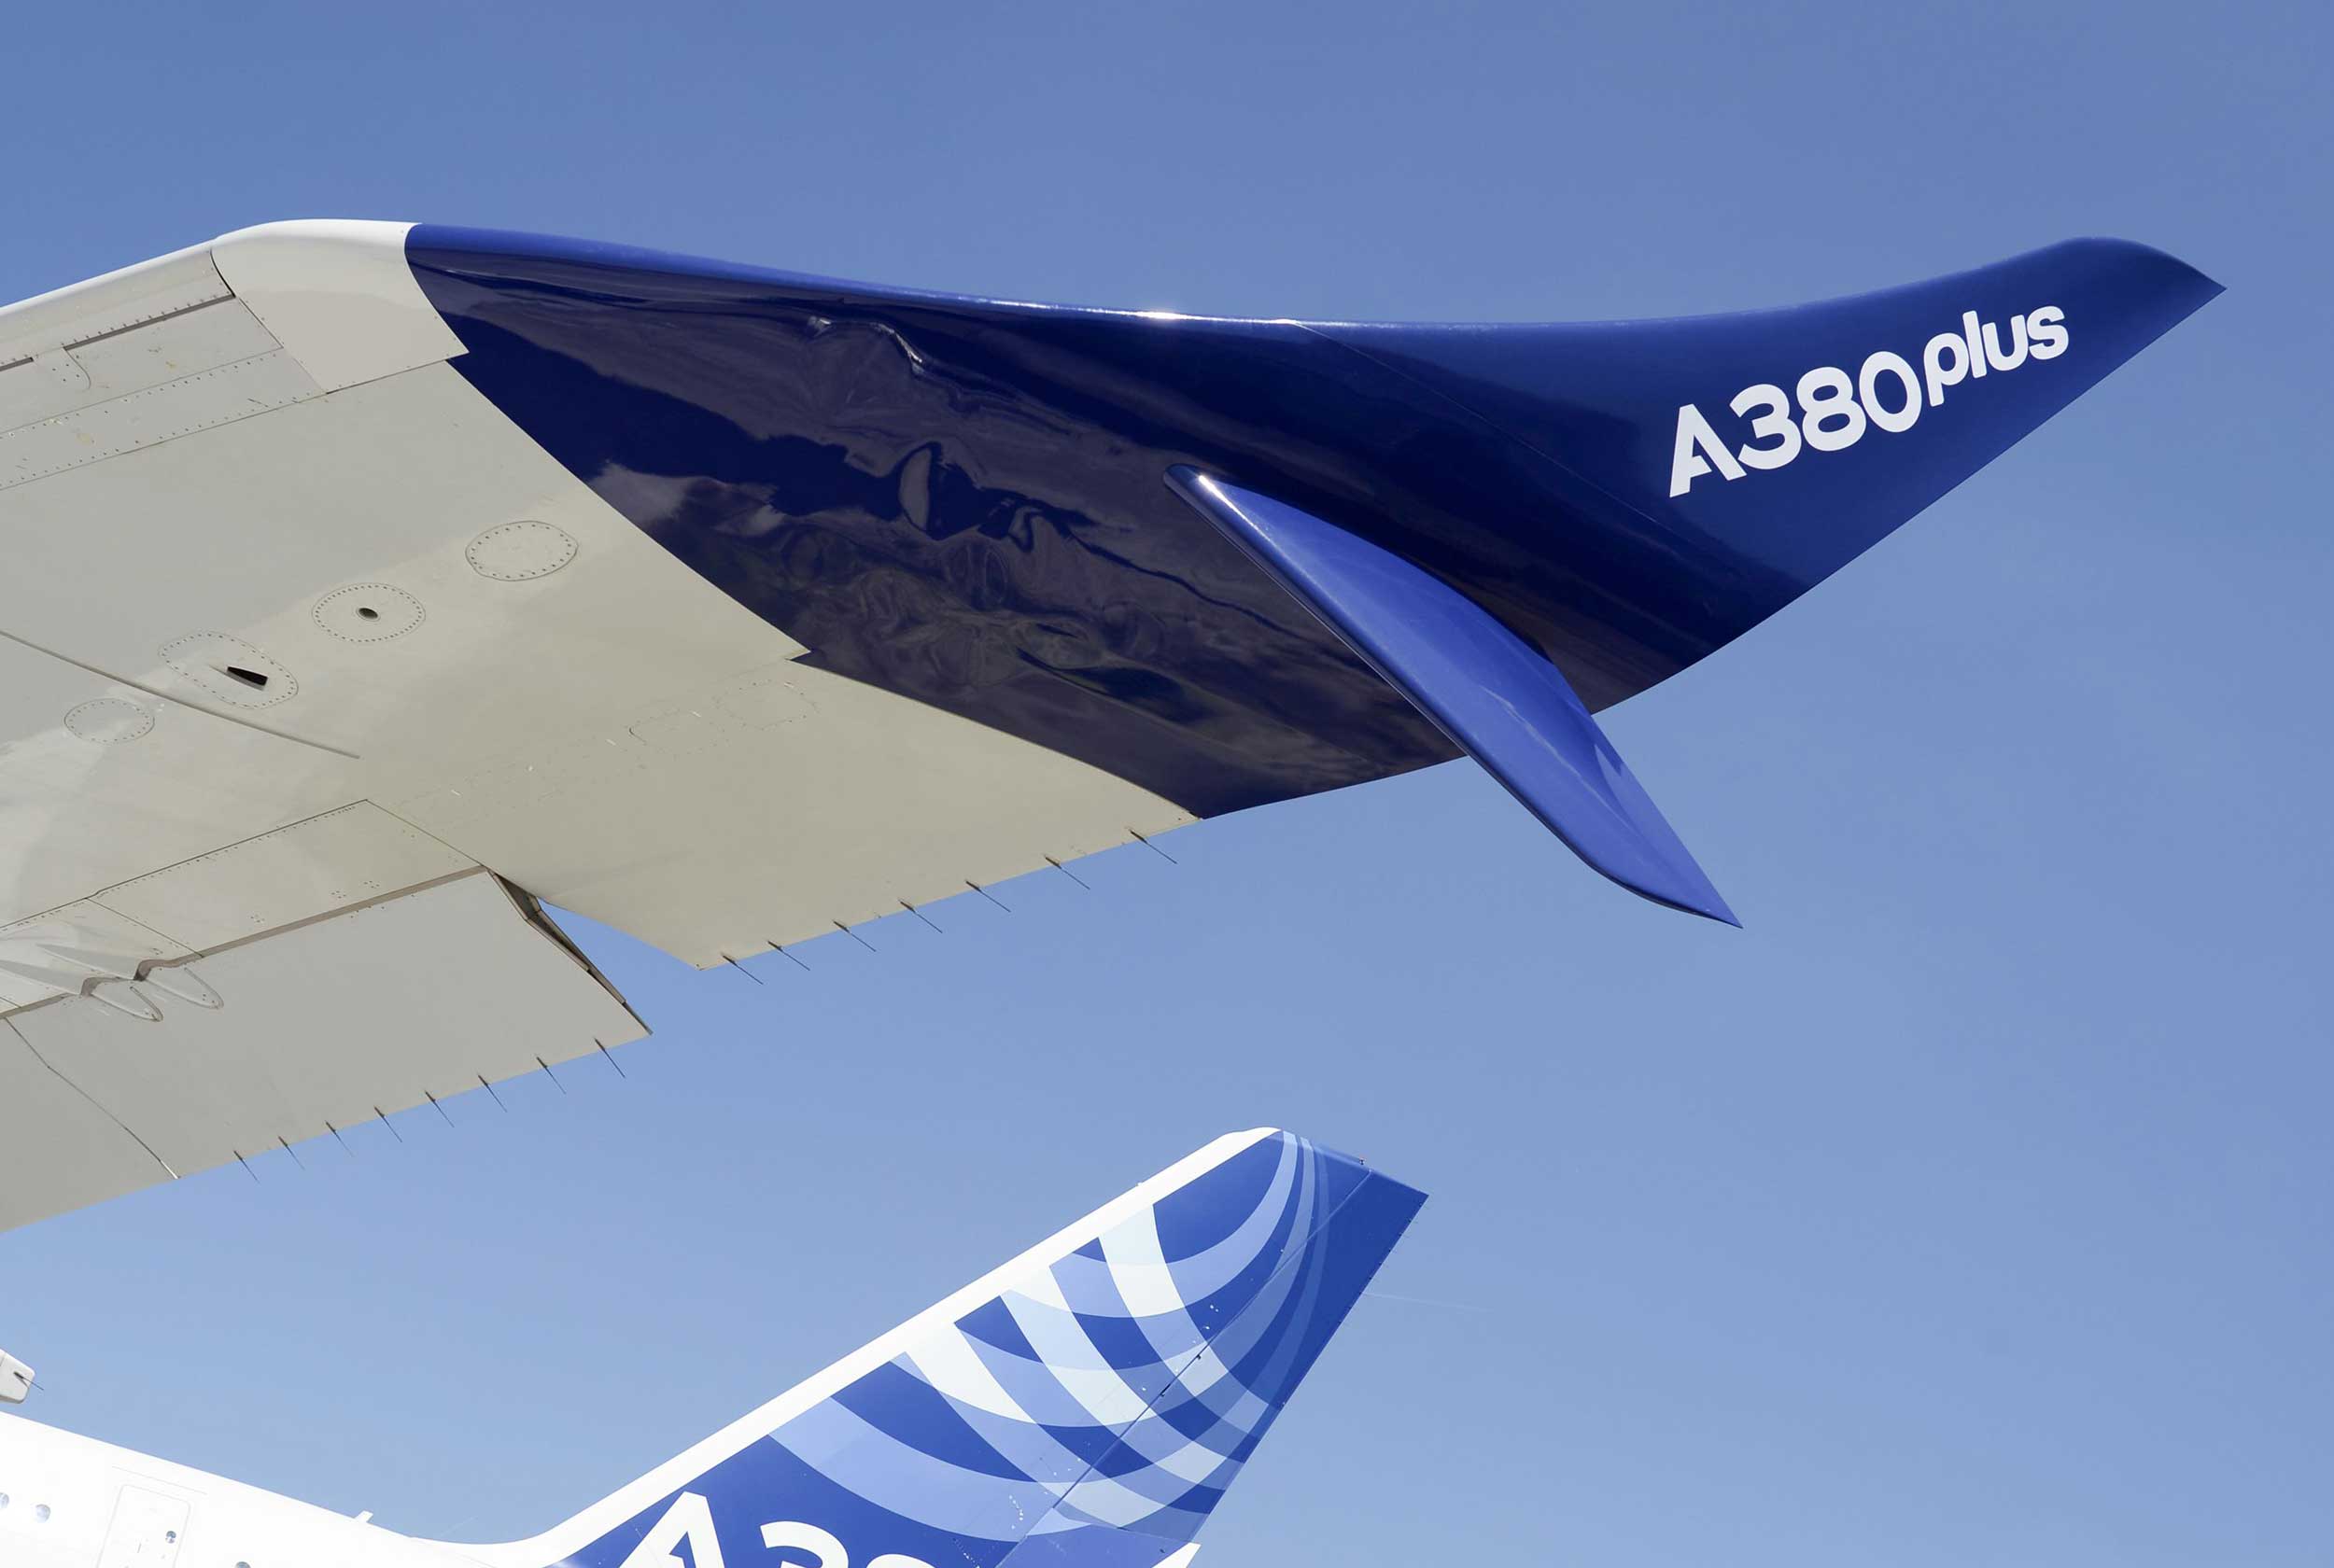 Airbus A380 plus winglet